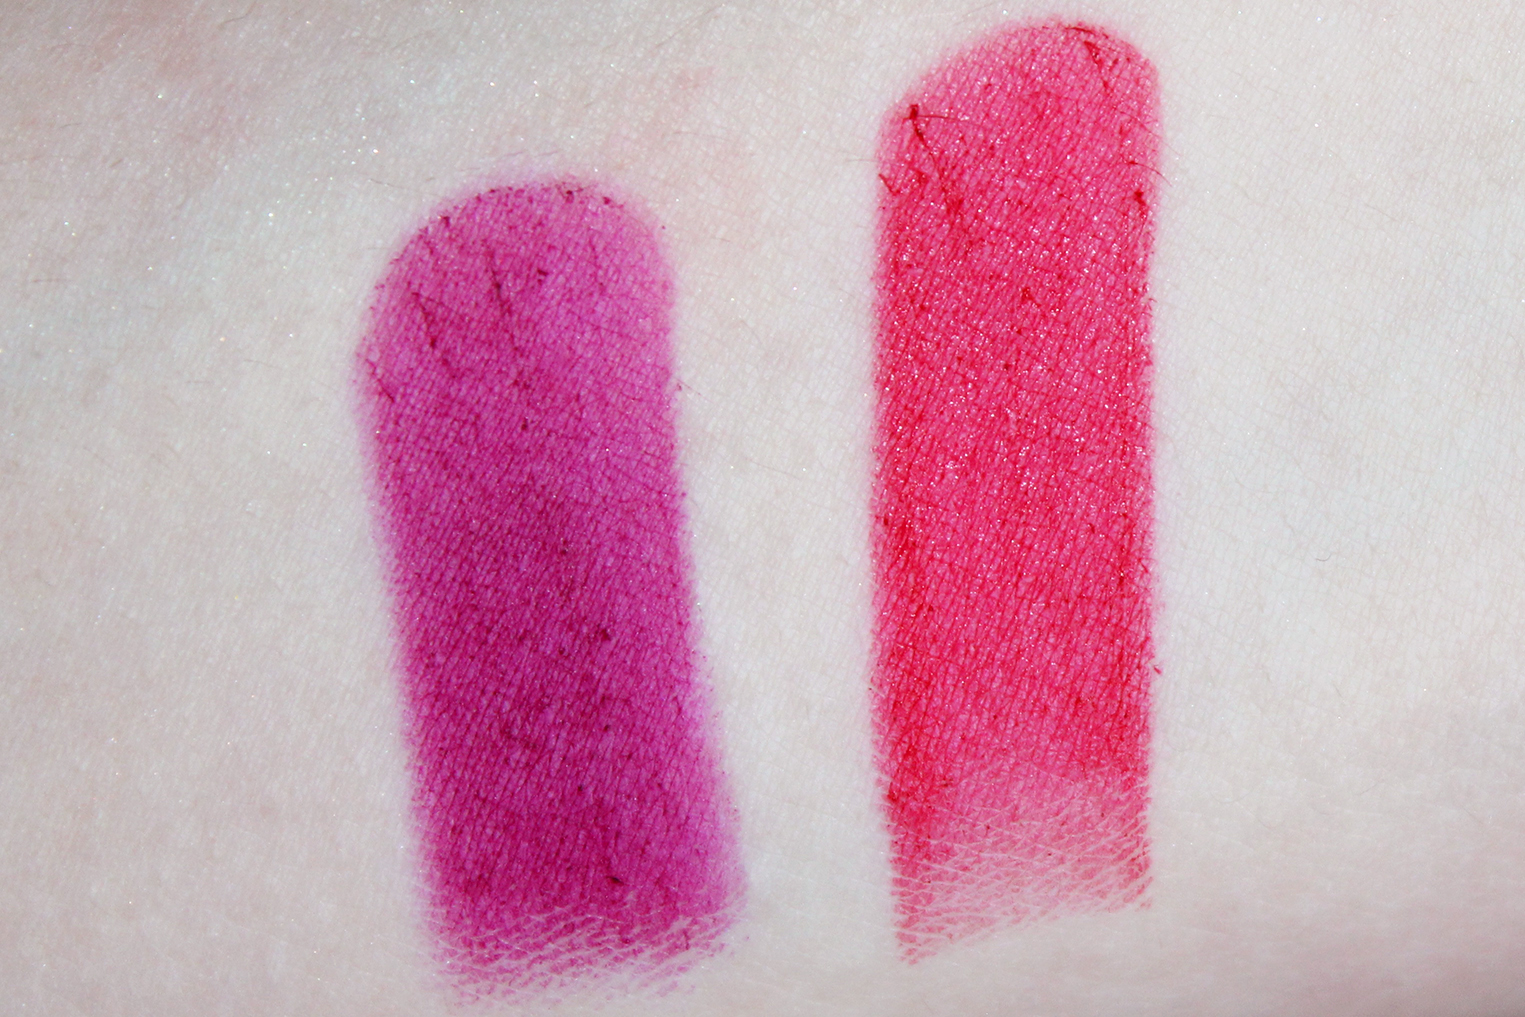 make-up studio lipstick swatches